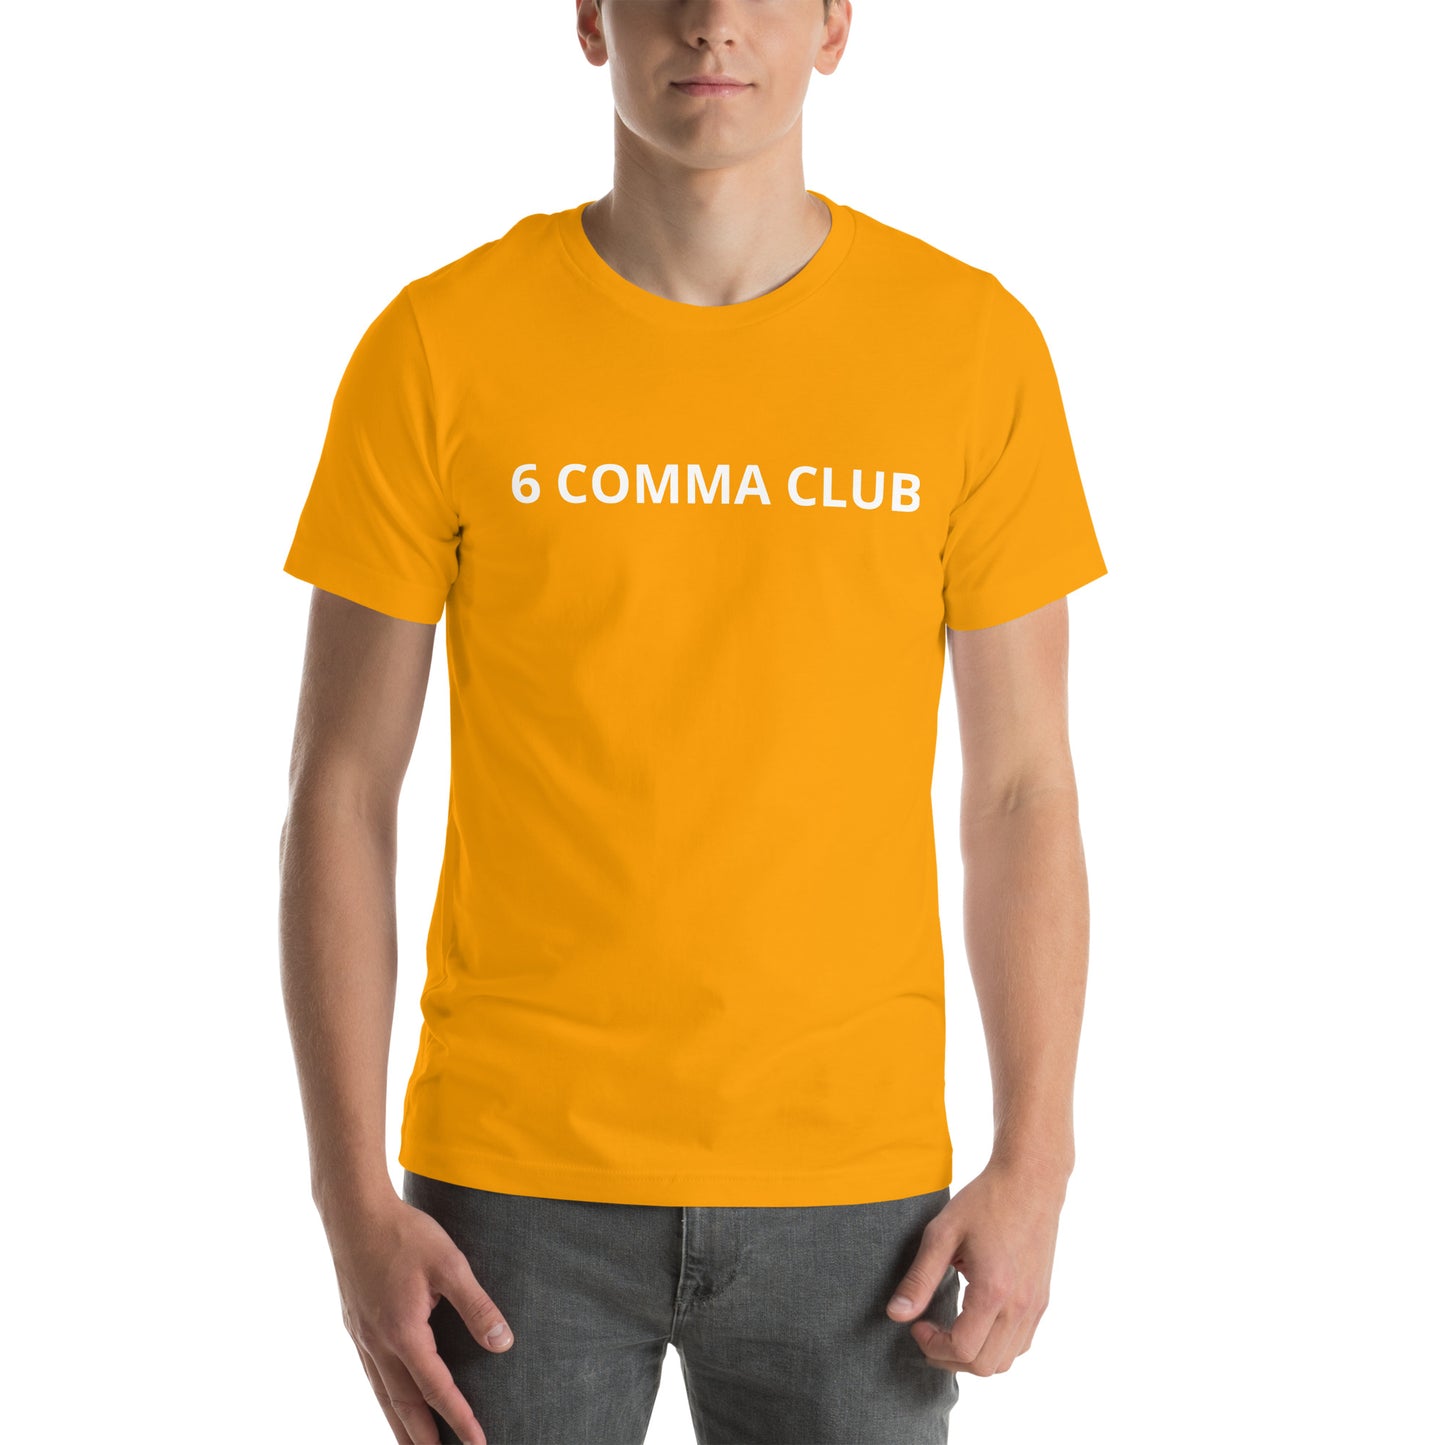 6 COMMA CLUB  Unisex t-shirt